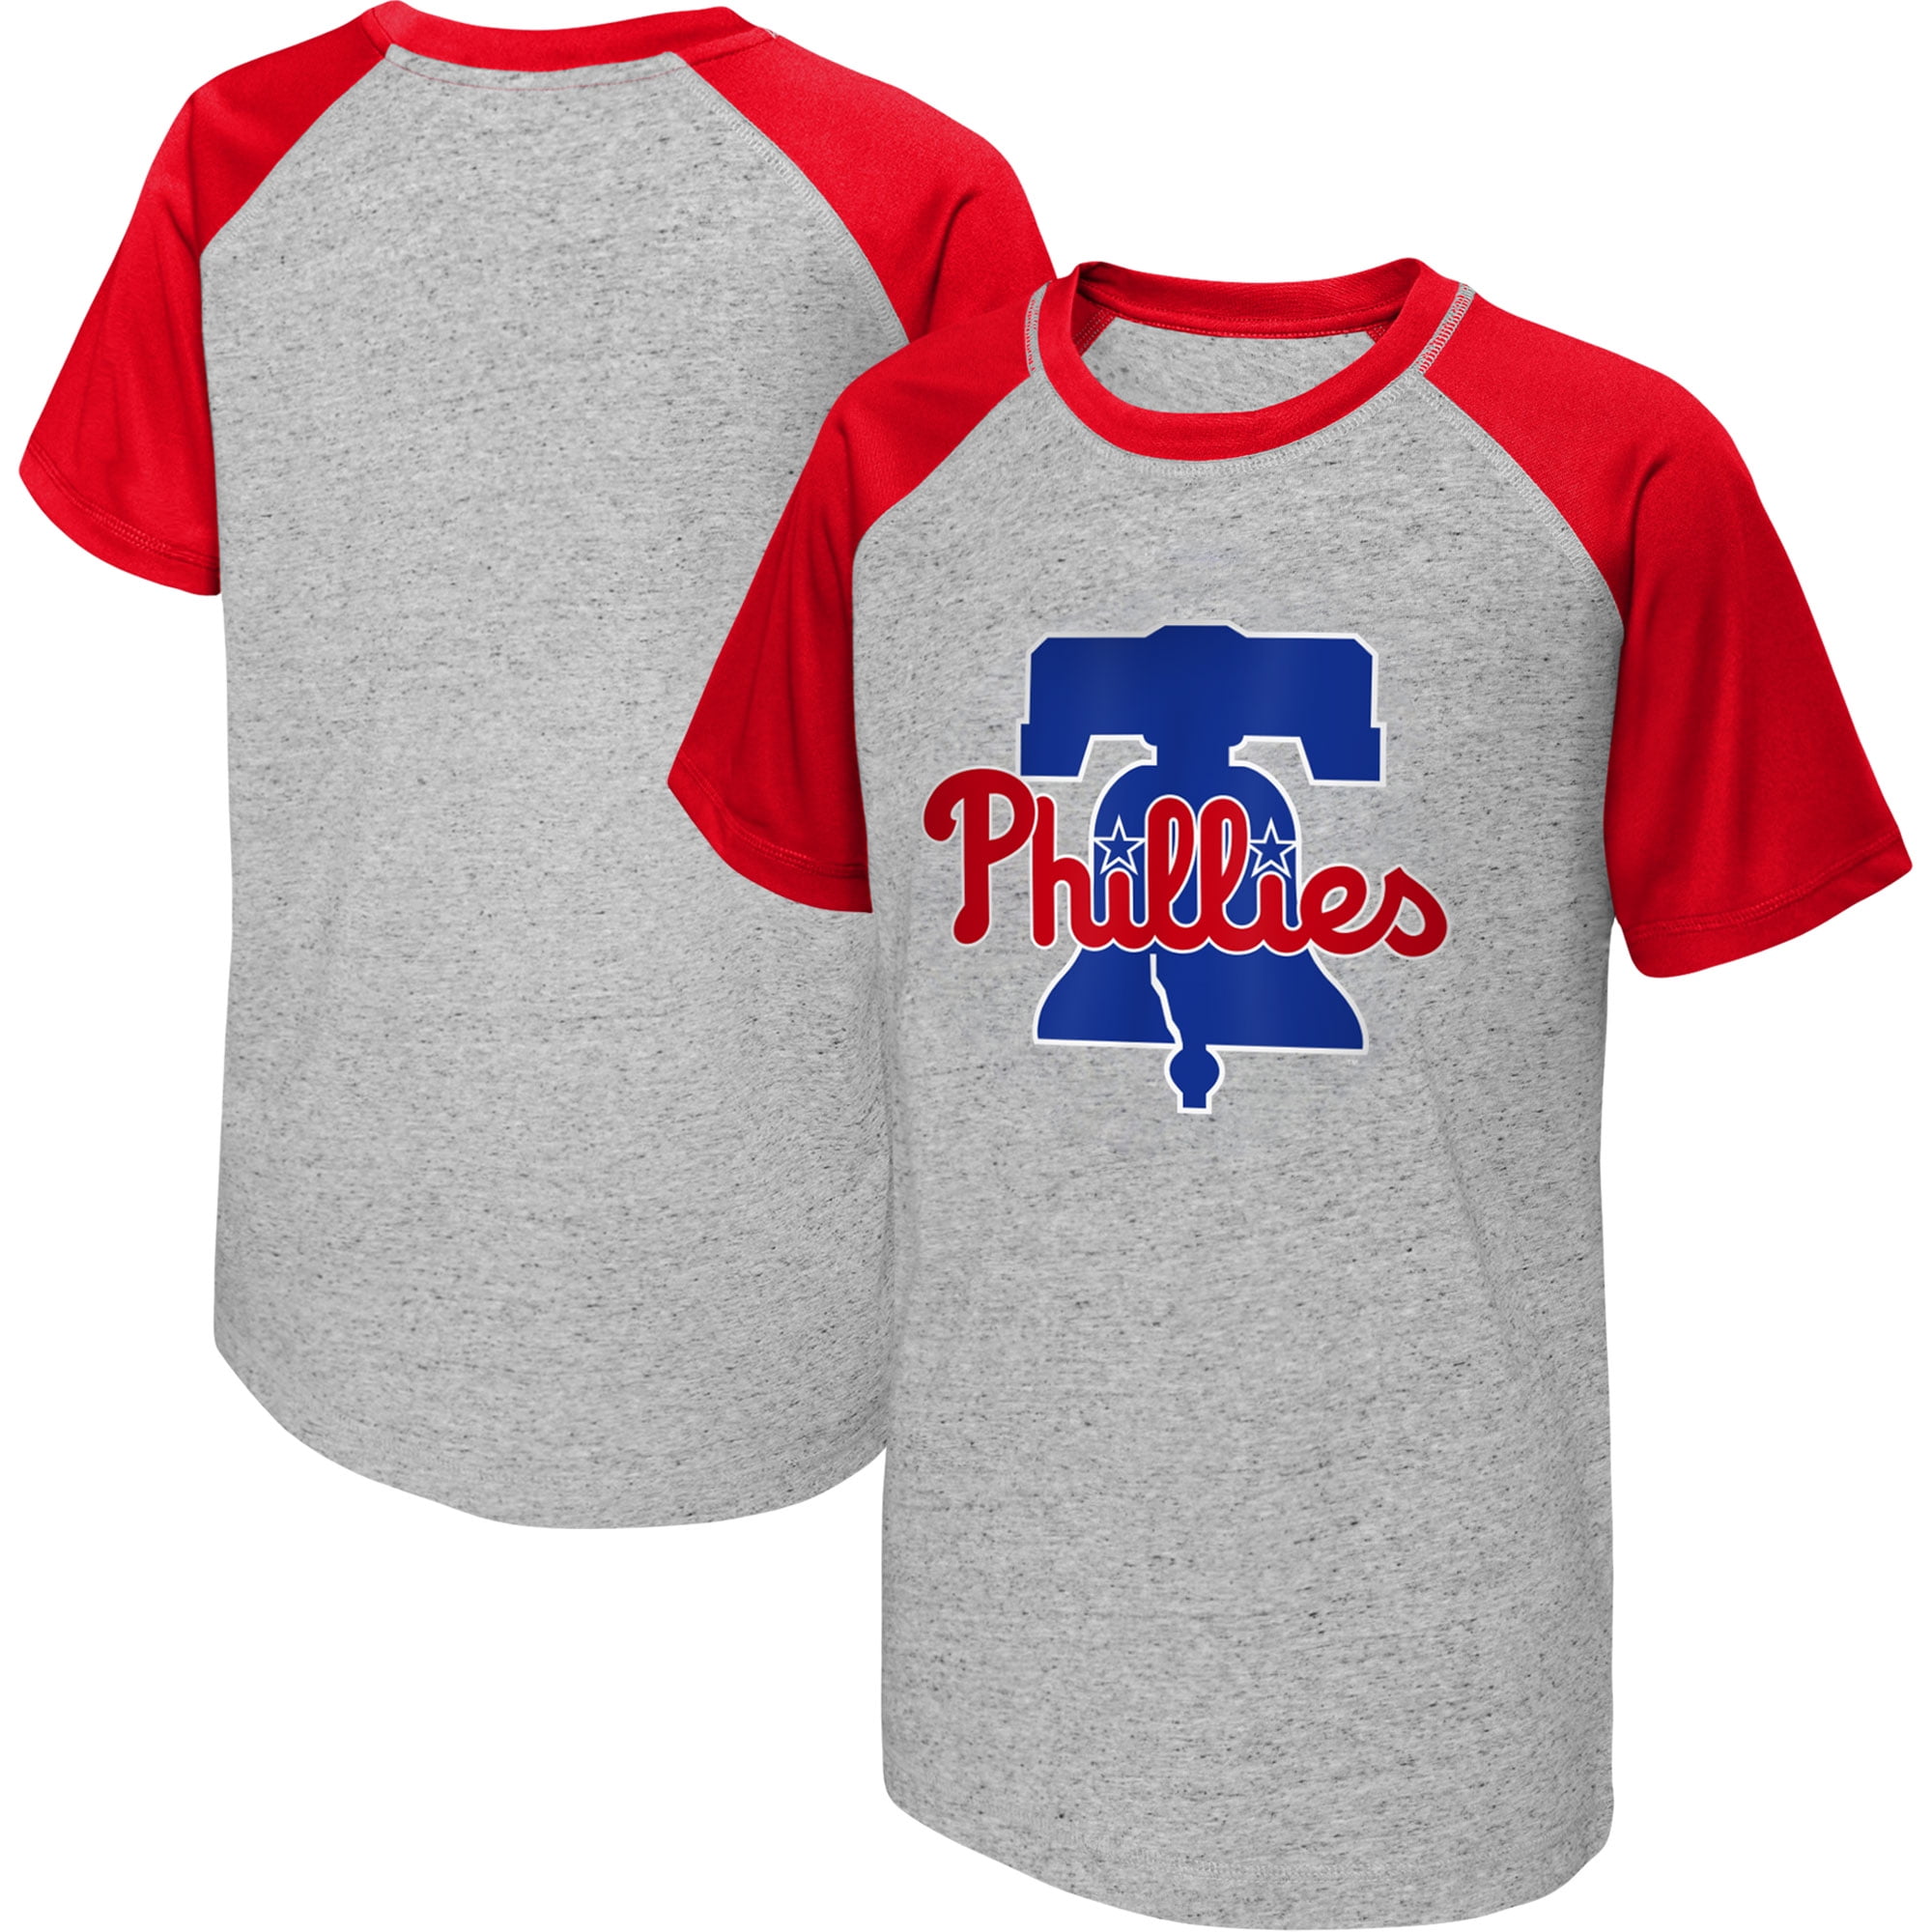 Boys Philadelphia Phillies MLB Jerseys for sale